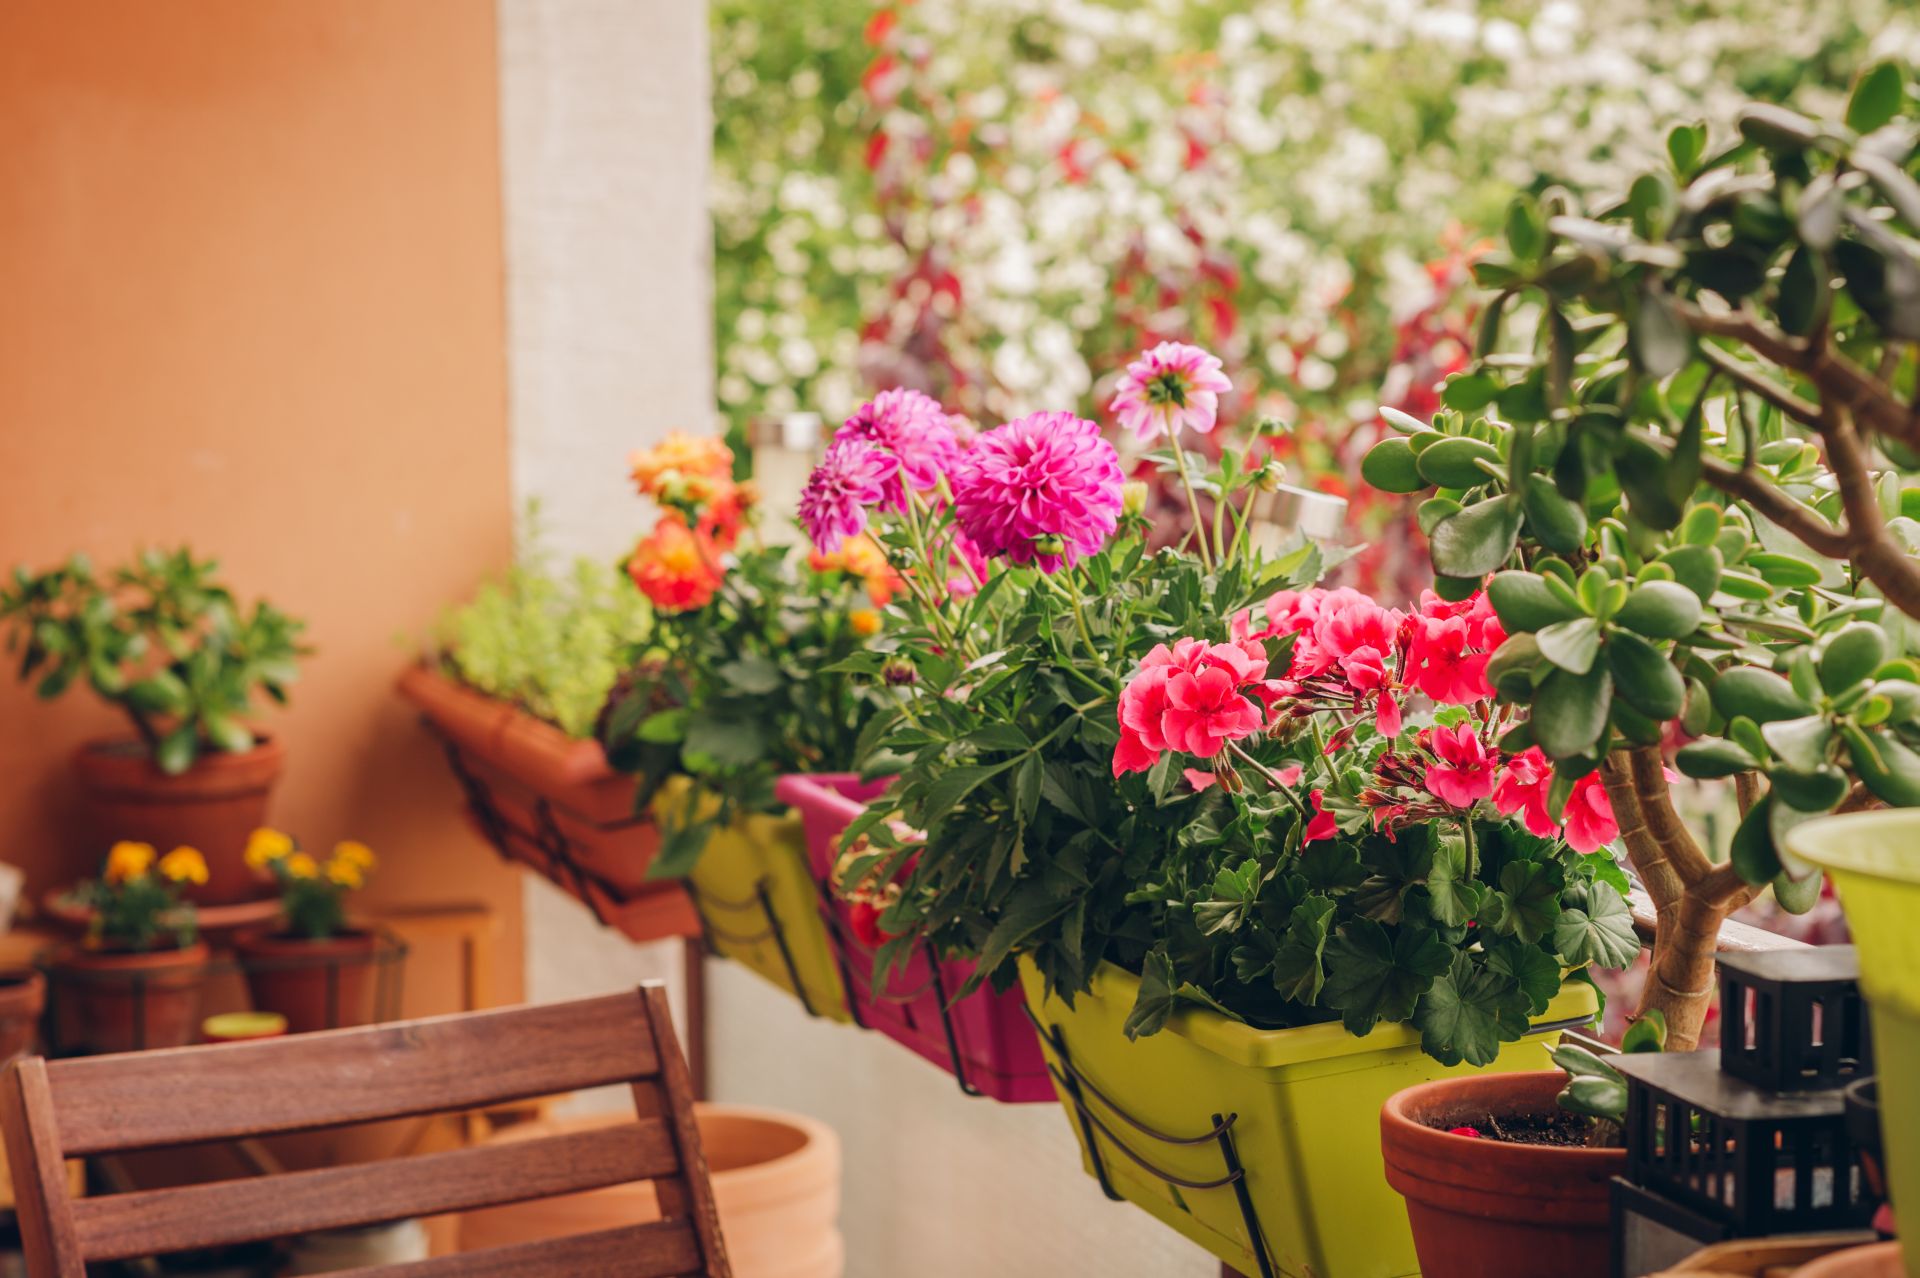 Pelargonia to piękna ozdoba balkonu. Fot. Shutterstock